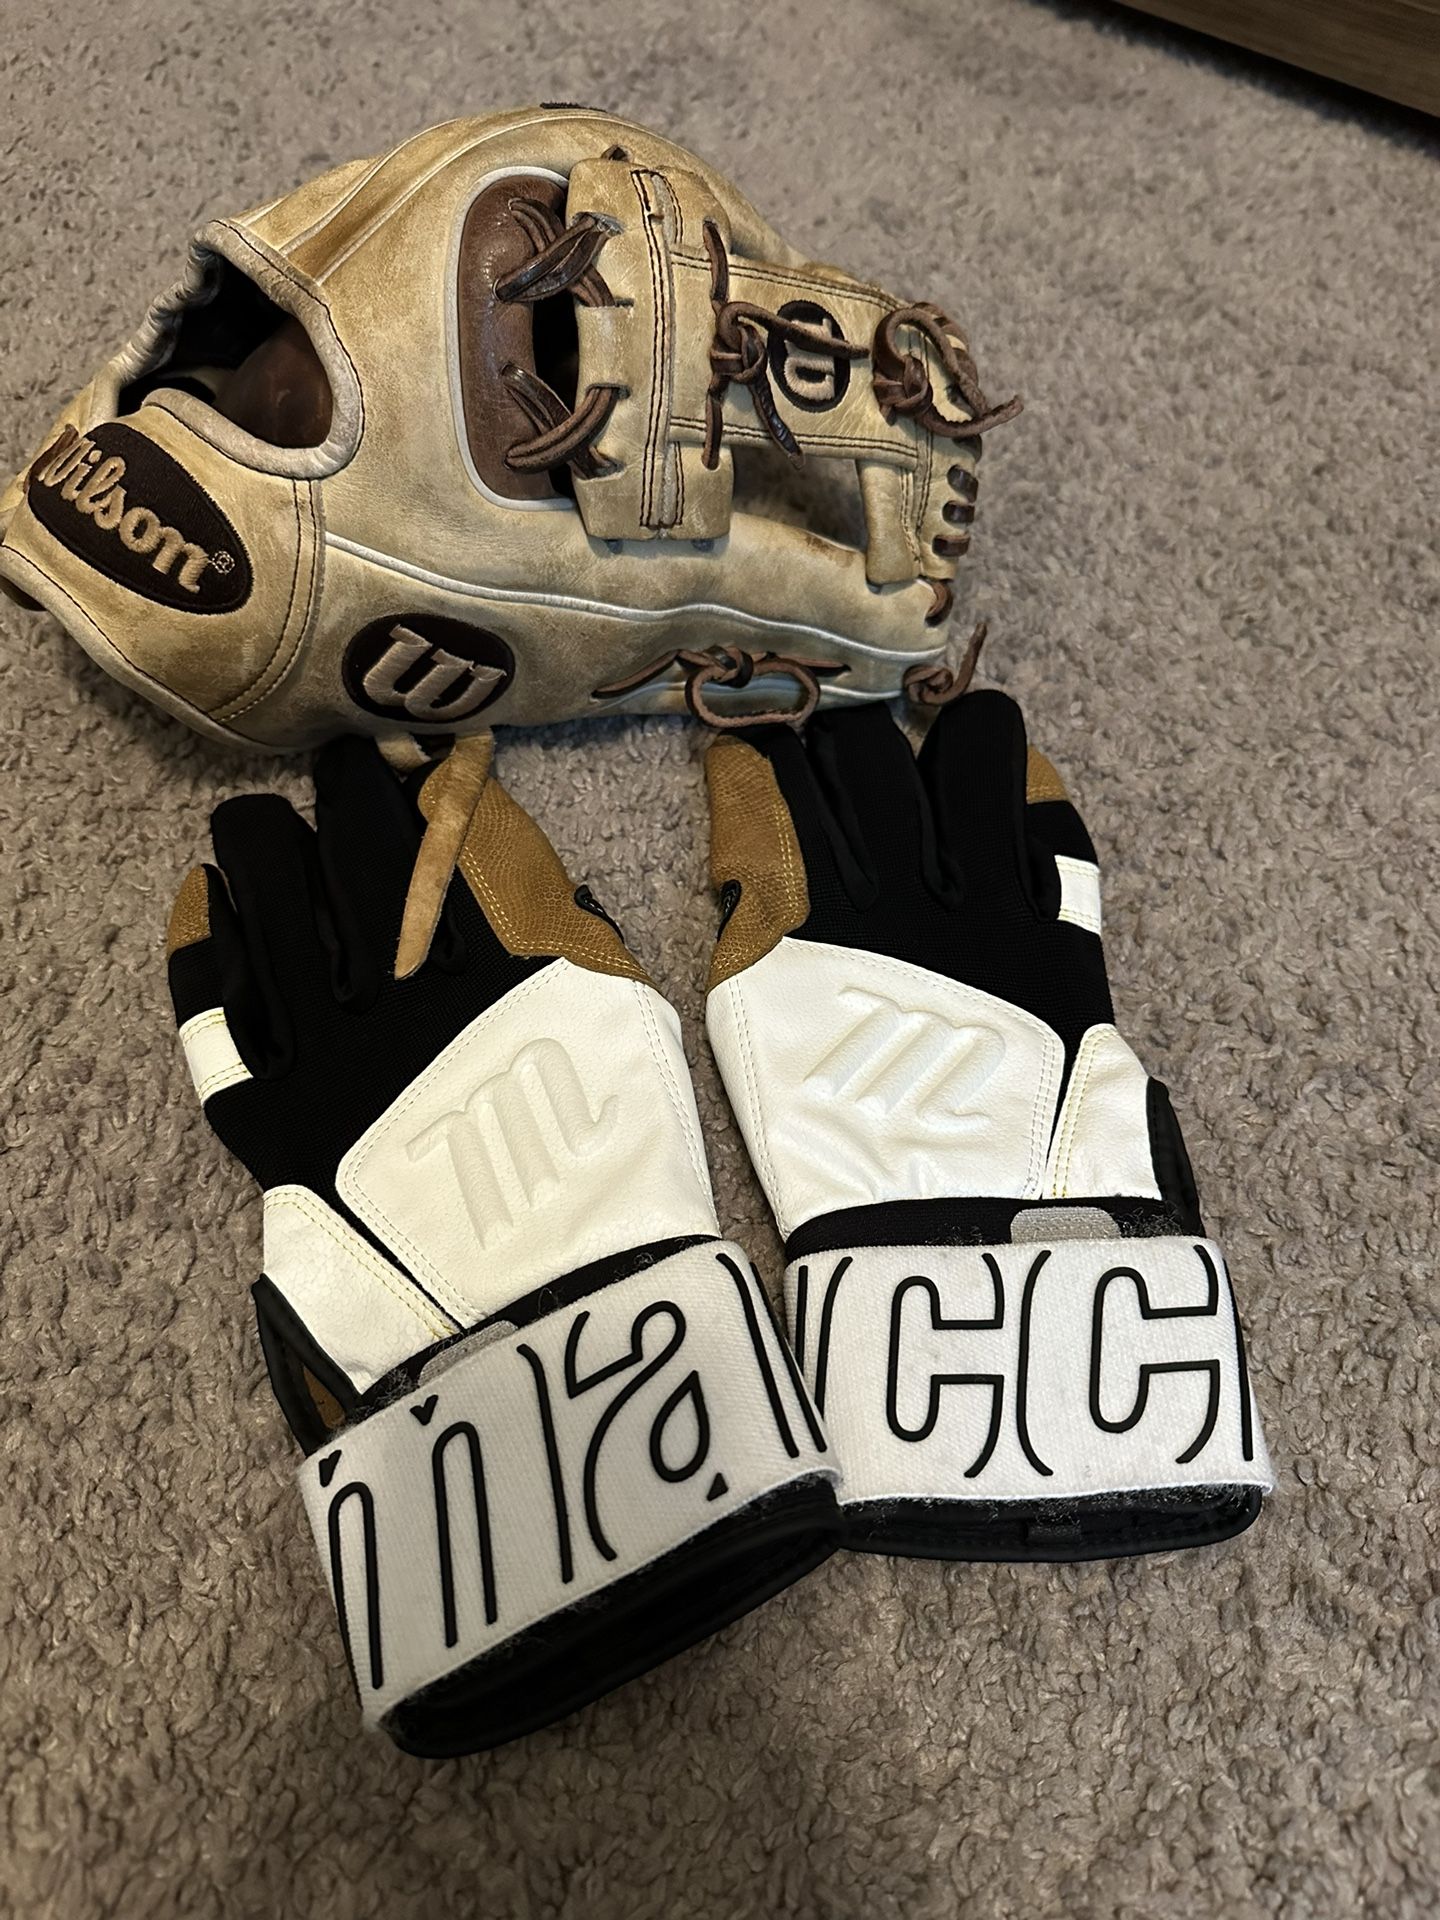 Baseball Glove And Batting Gloves 